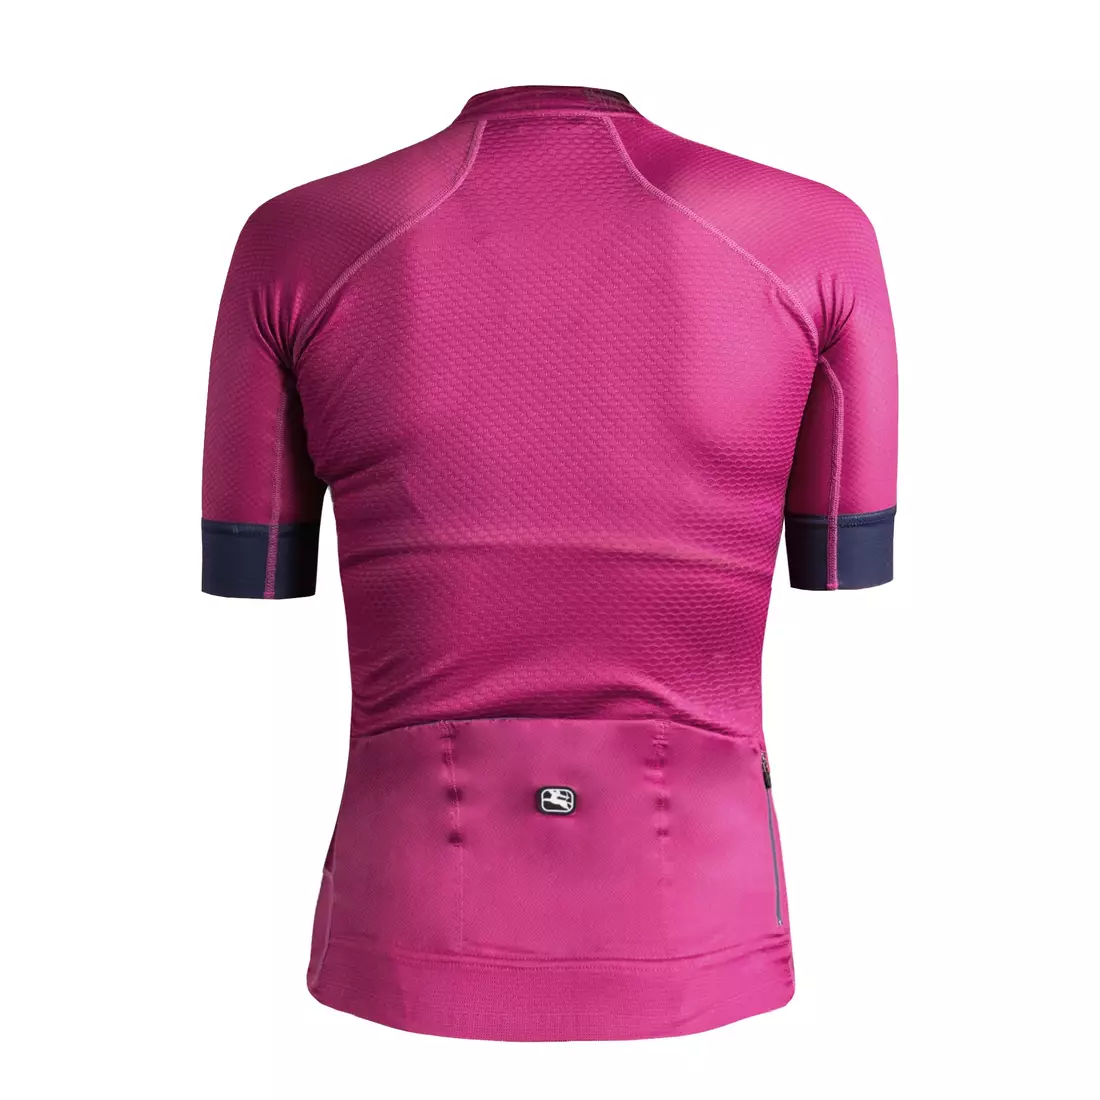 GIORDANA FR-C PRO women's cycling jersey, purple